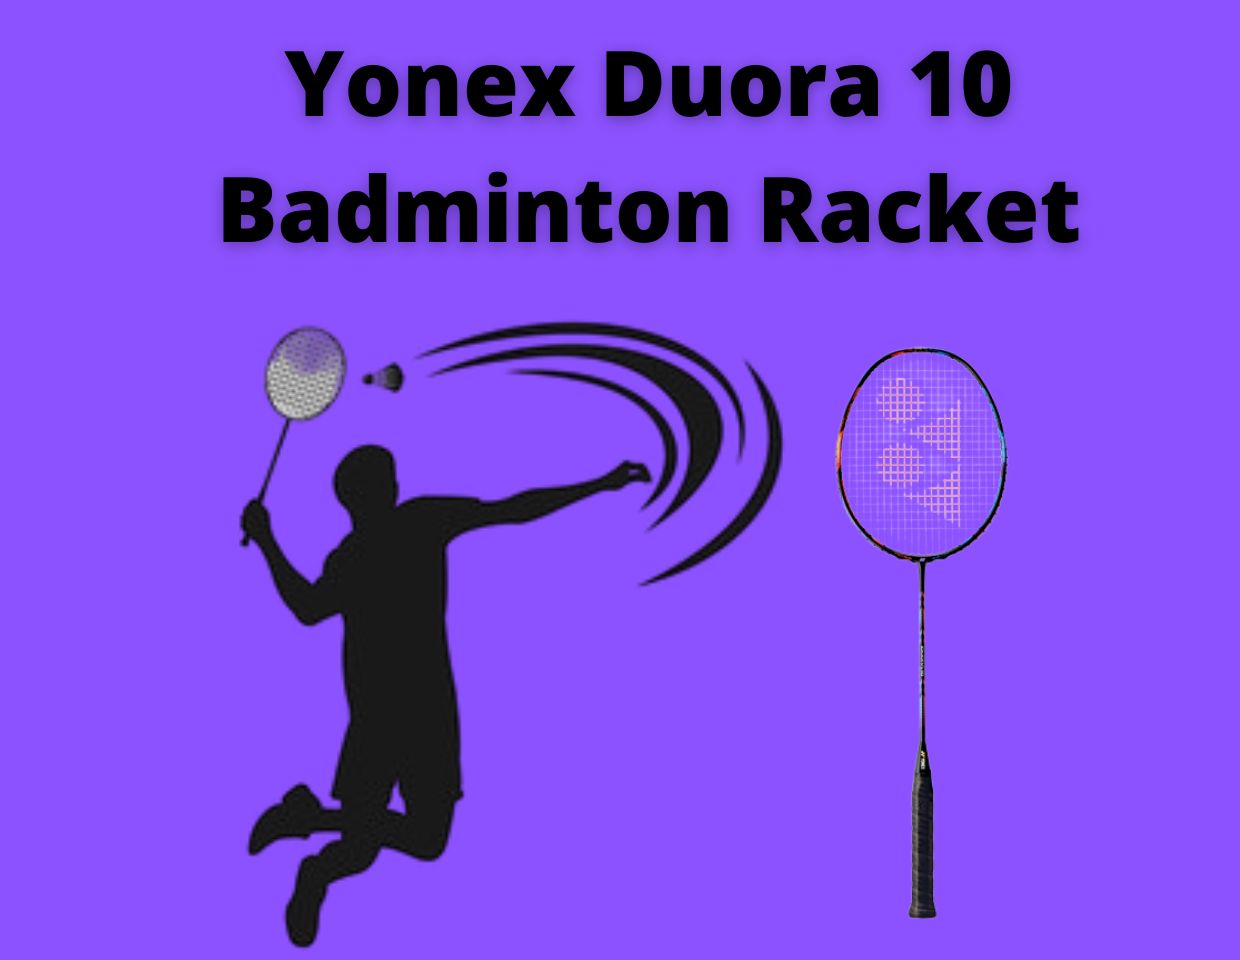 Yonex-Duora-10-Badminton-Racket